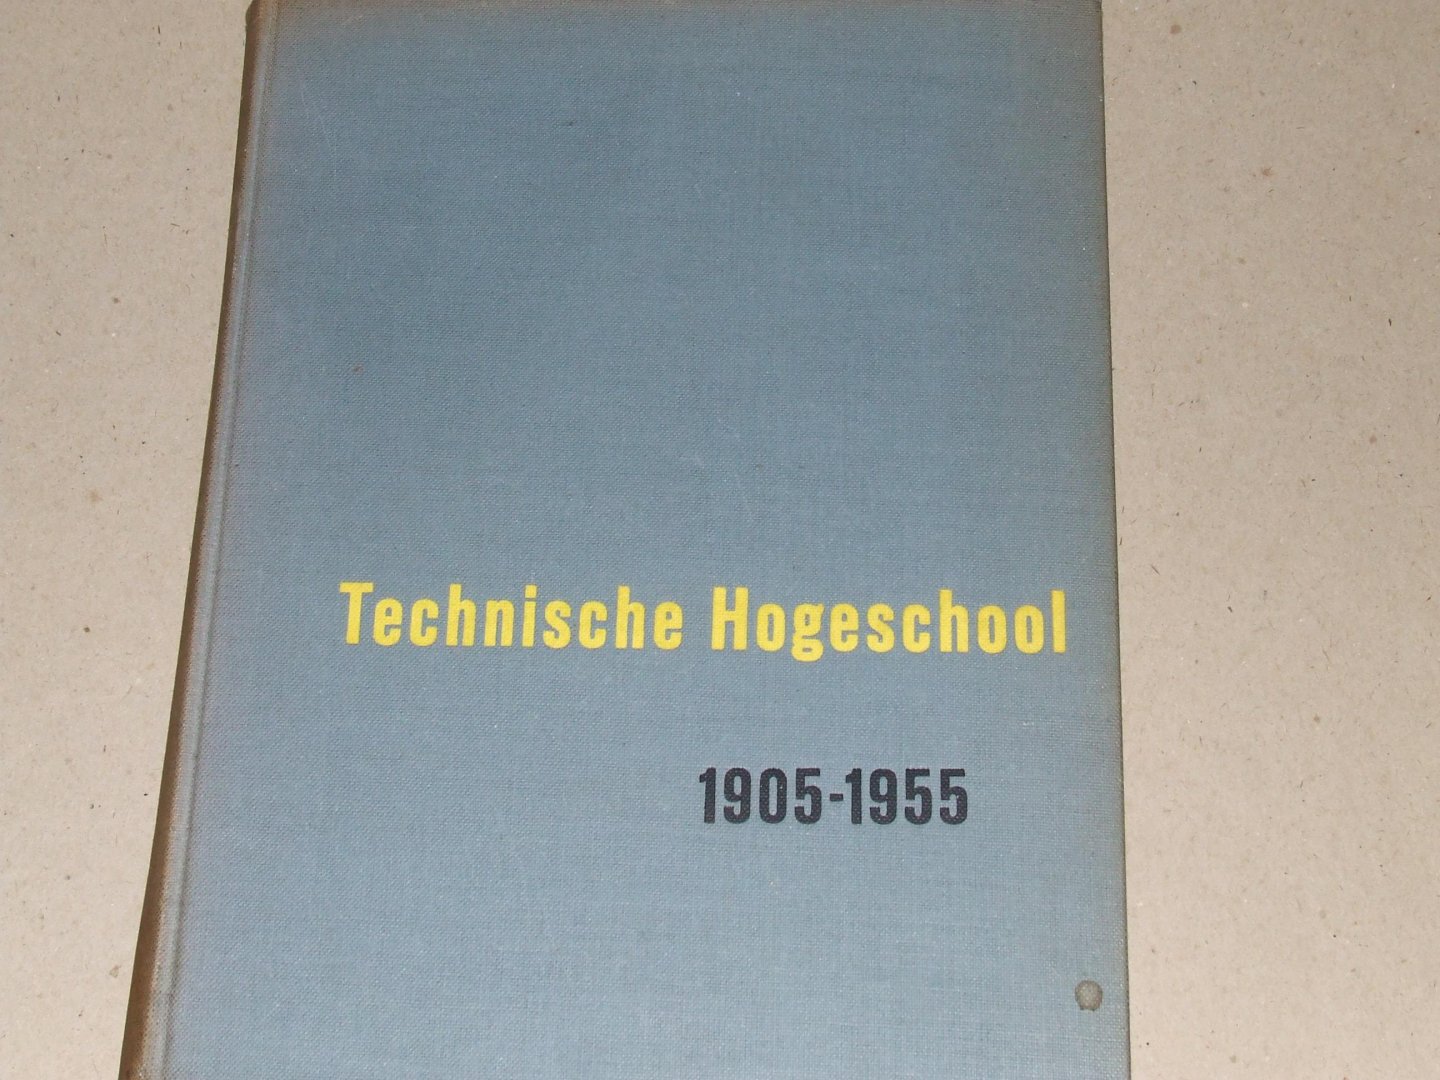 Kamp, A.F. - De Technische Hogeschool te Delft. 1905-1955